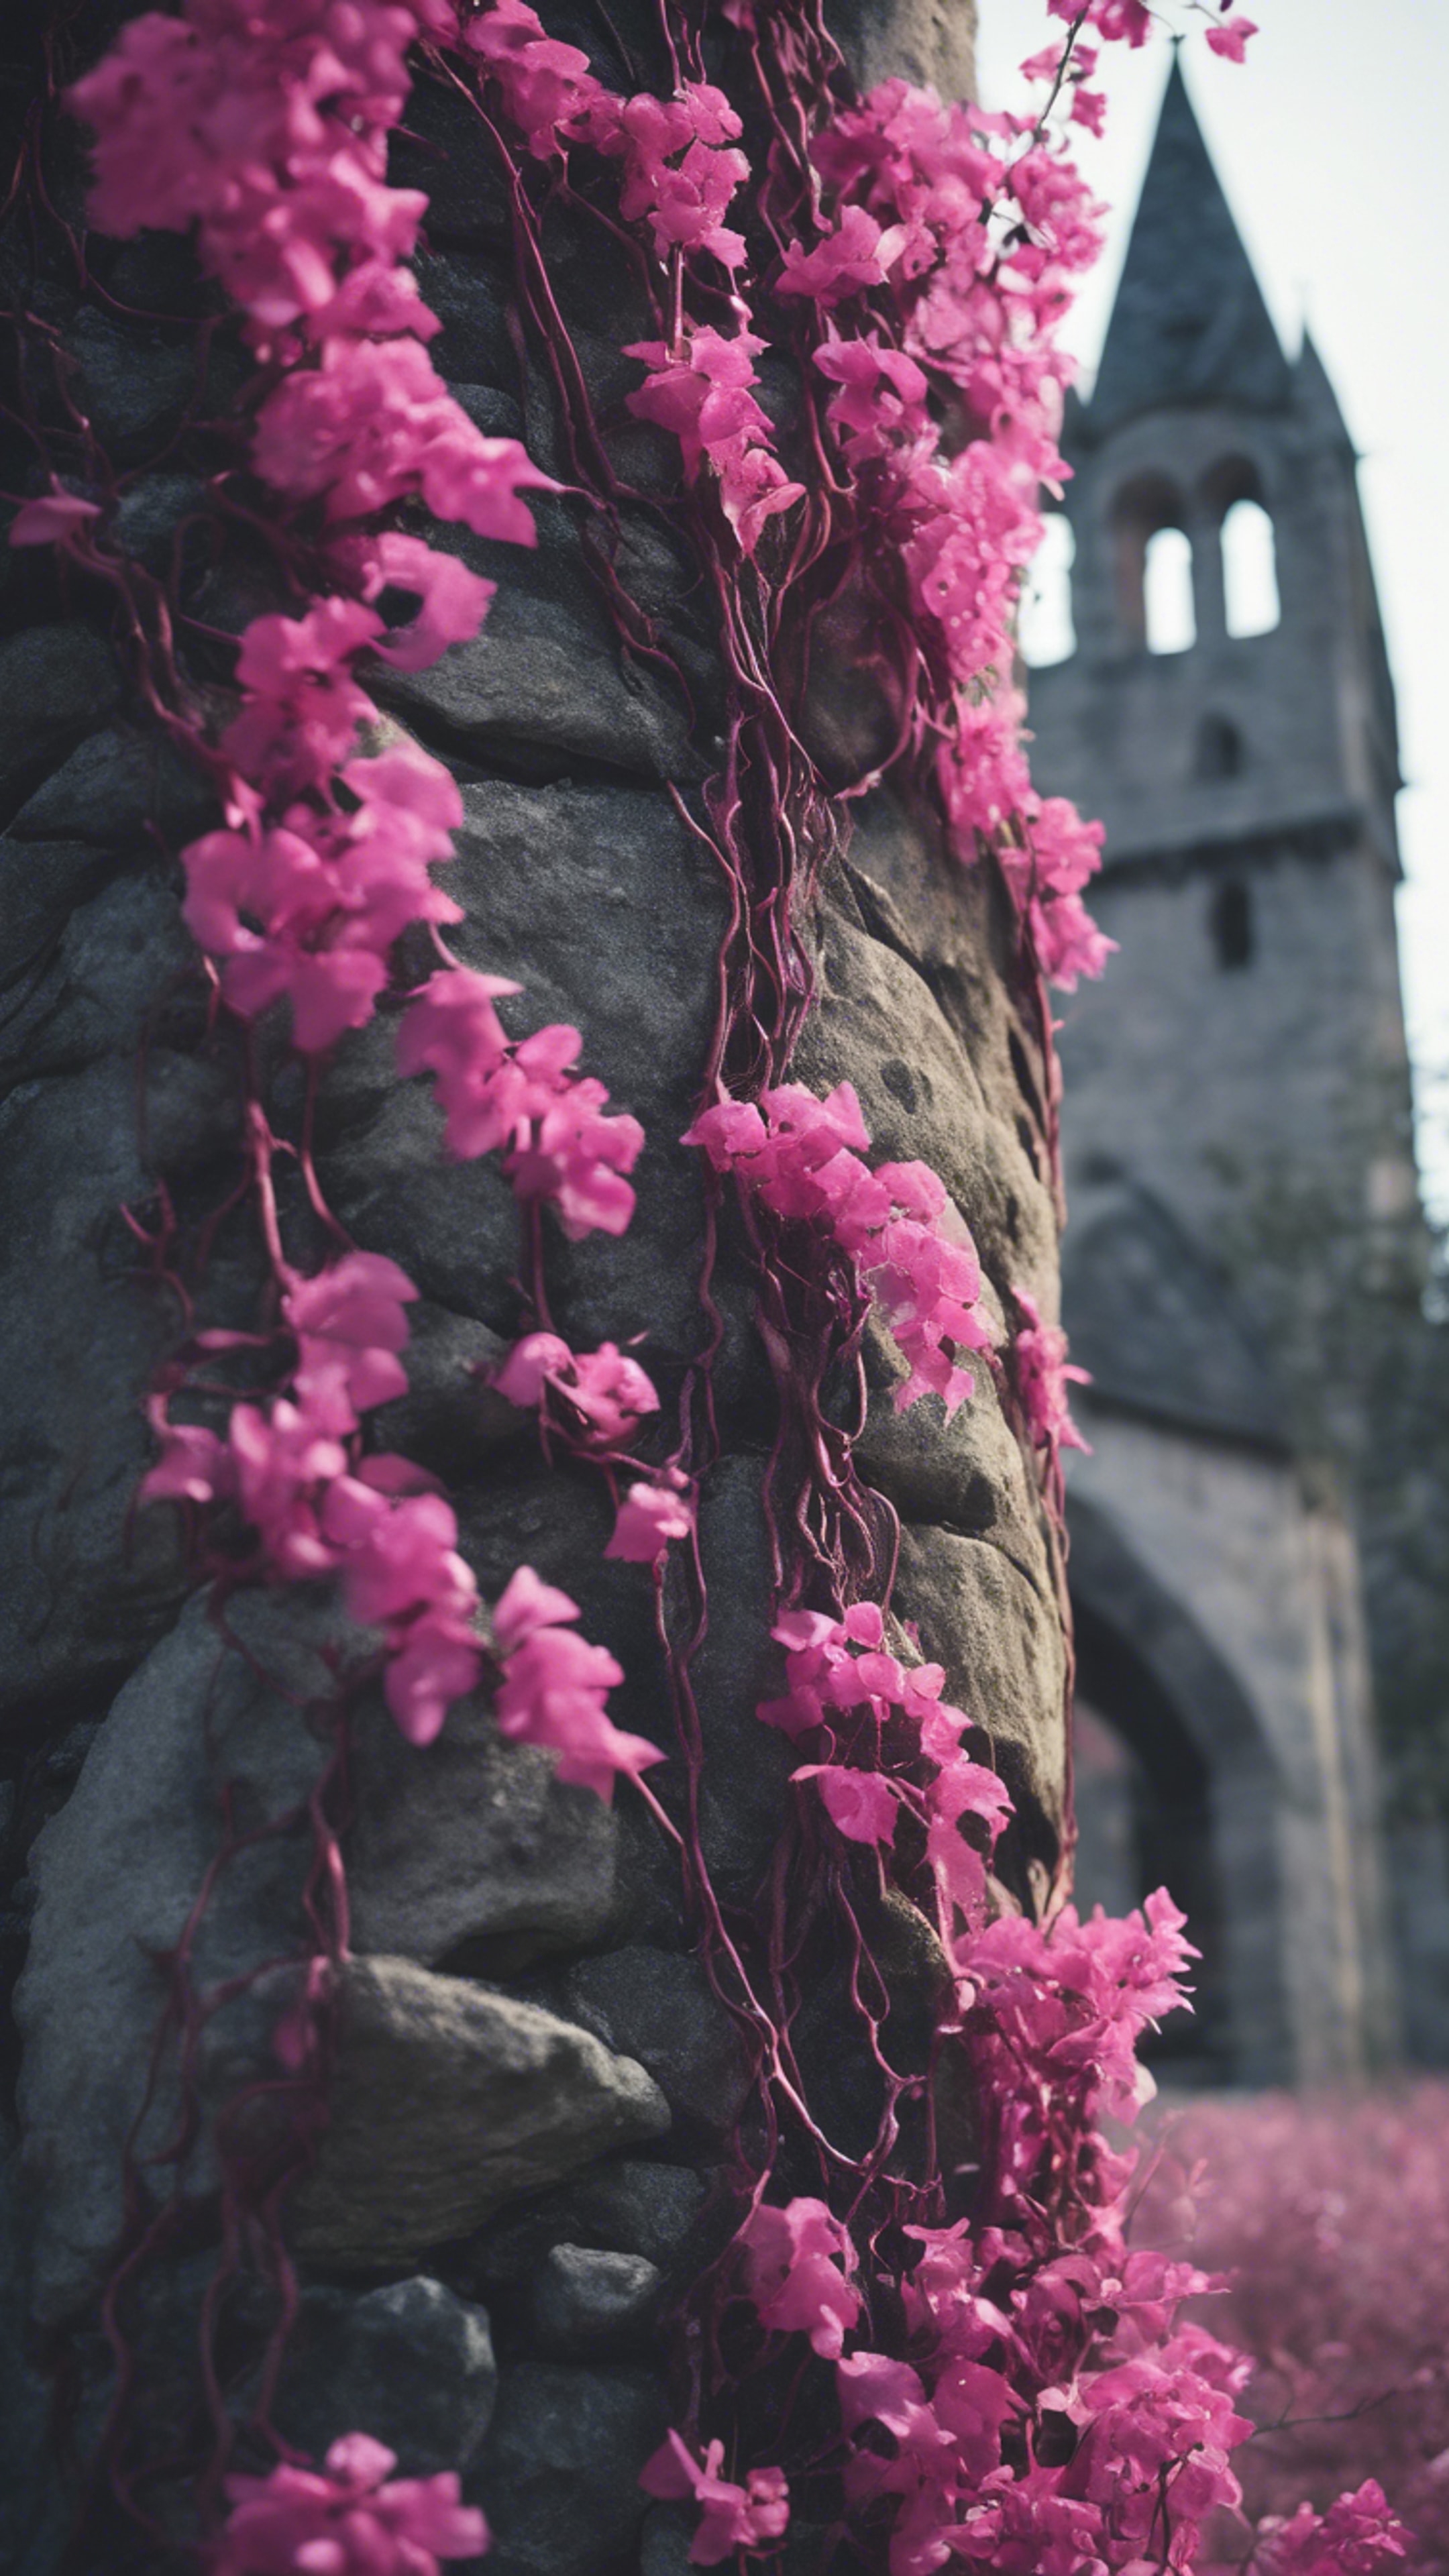 Dark pink Gothic vines creeping up a stone tower. Hintergrund[2209f0af7d054e0296c9]